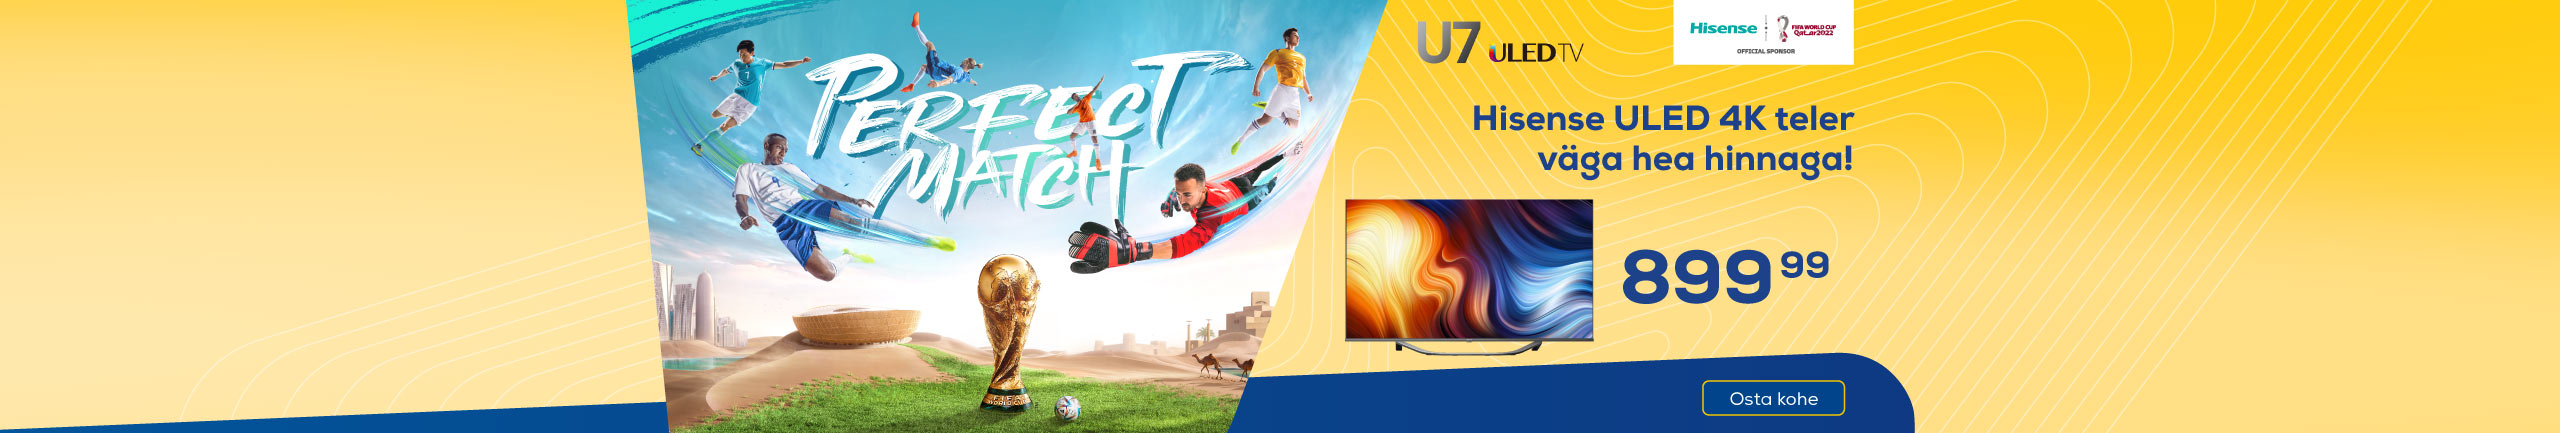 Hisense ULED 4K TV sale